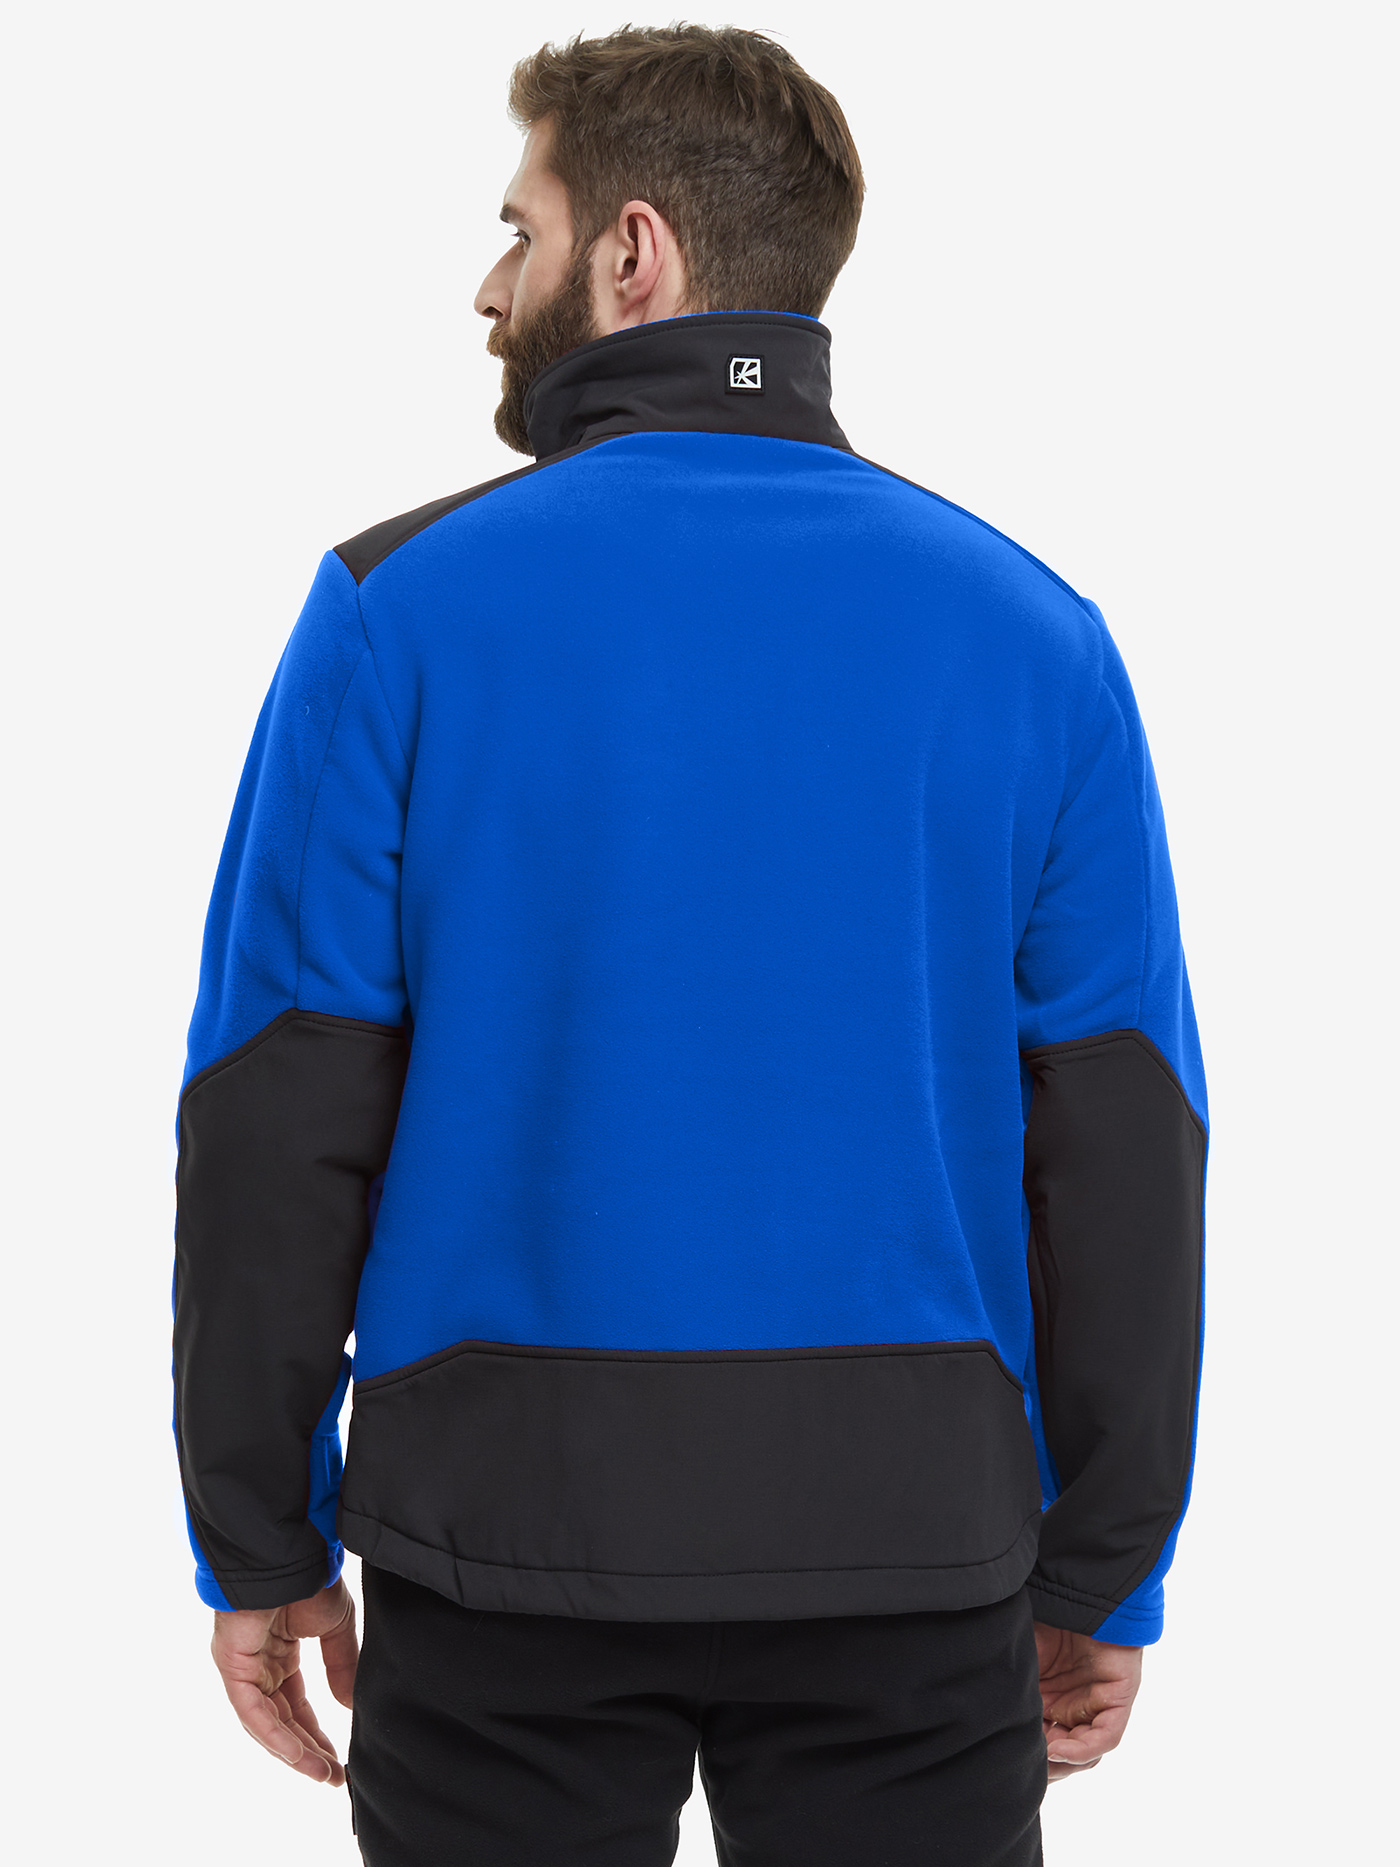 Куртка BASK, размер 48, цвет синий 2262-9305-048 Guide - фото 3